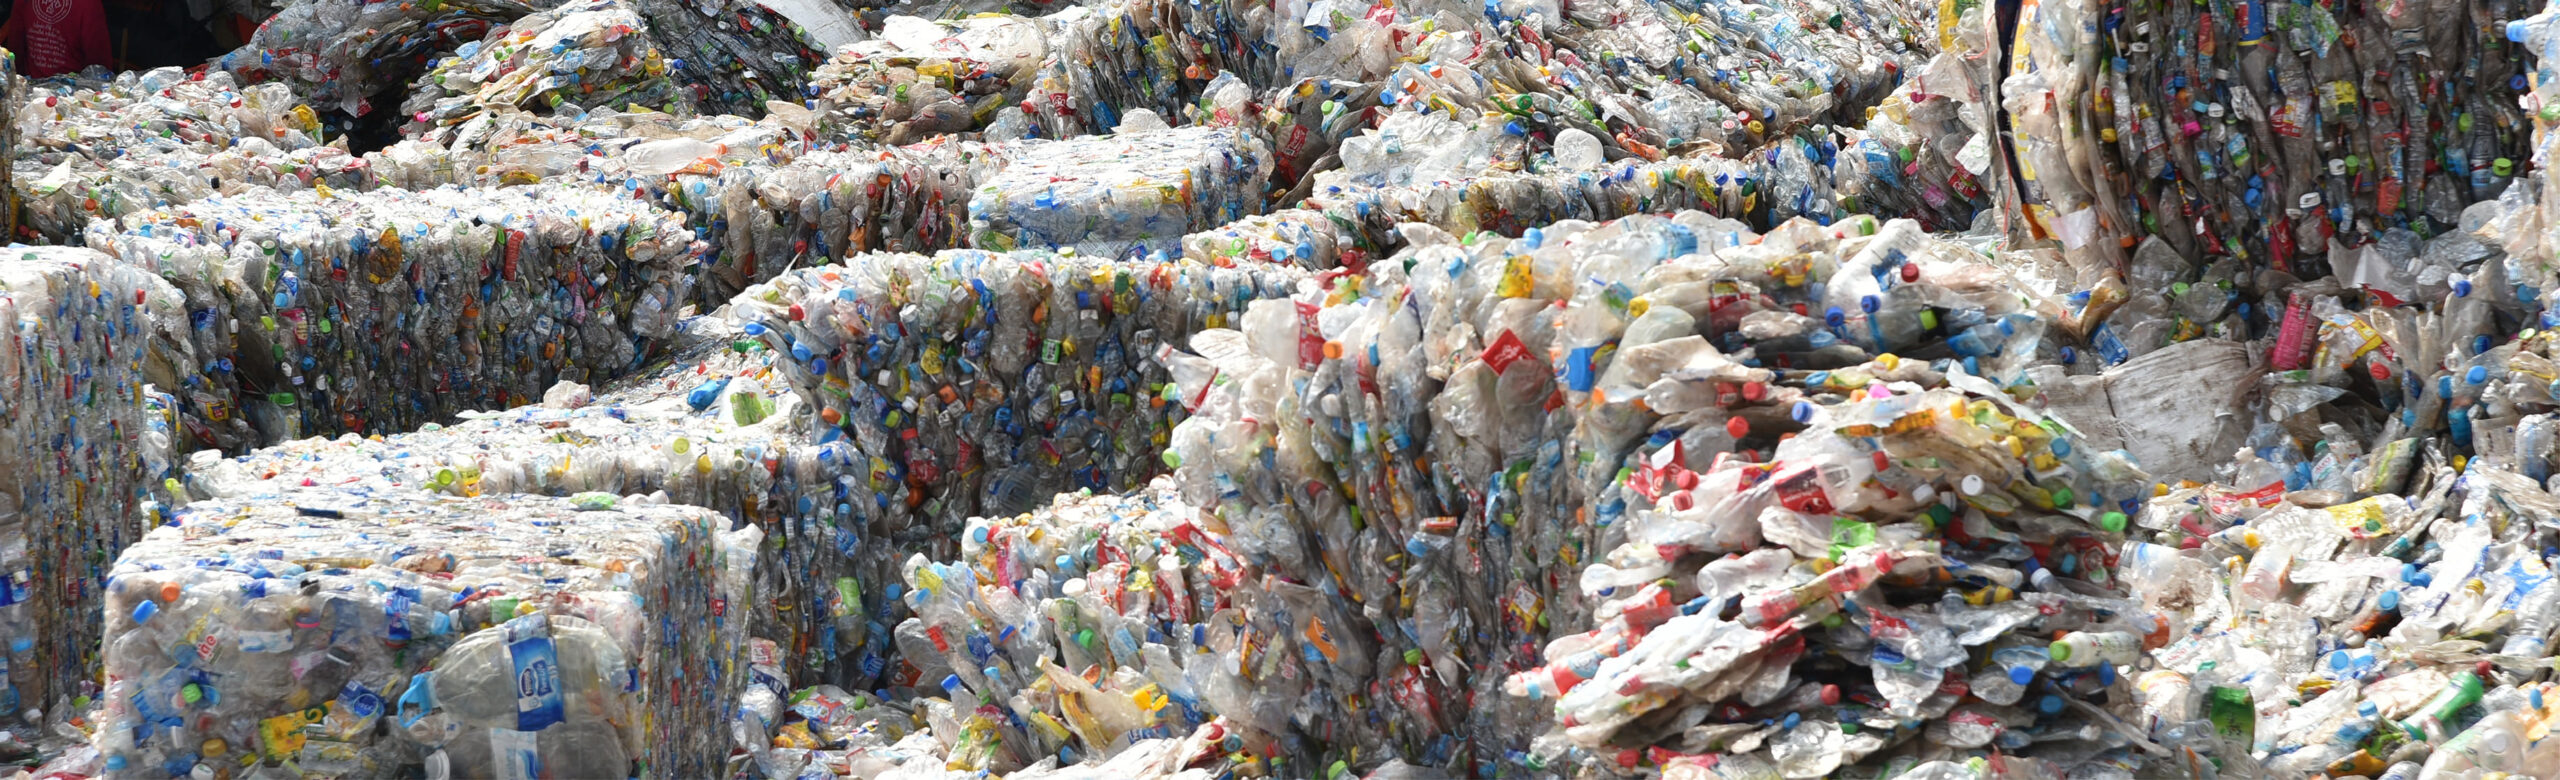 Plastic recycling at landfills